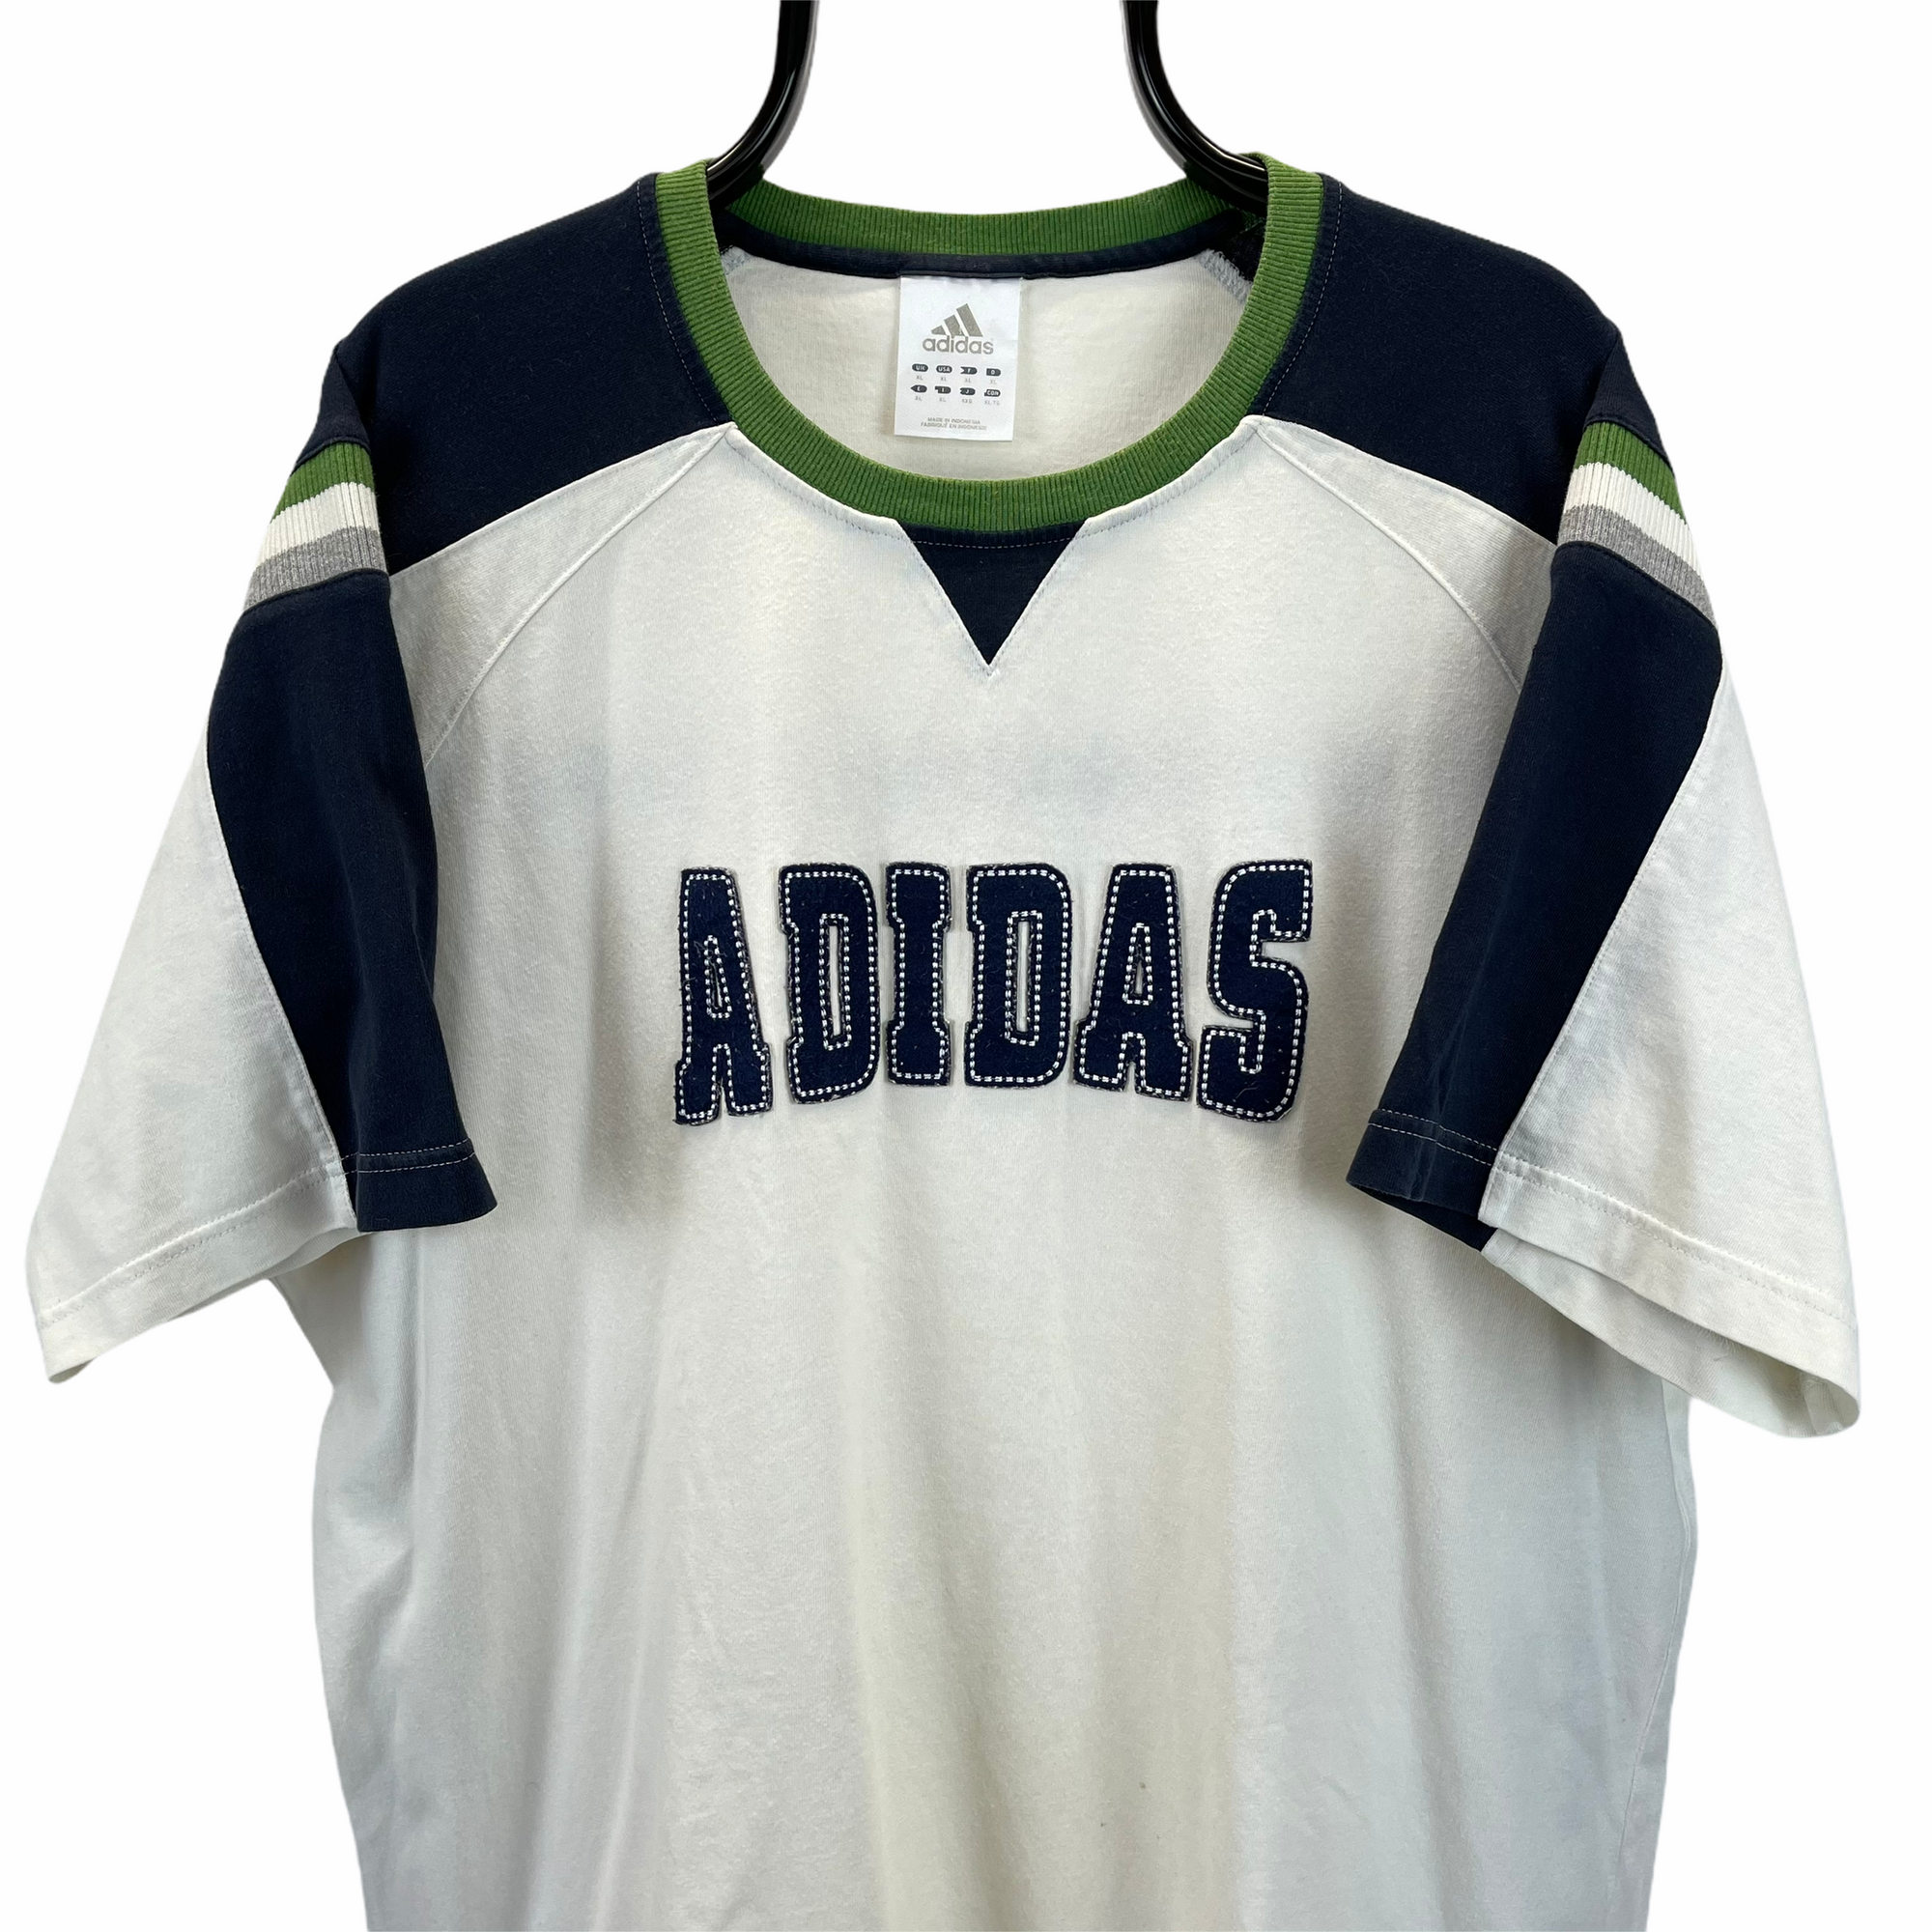 Vintage Adidas Spellout Tee in White, Green & Navy - Men's XL/Women's XXL